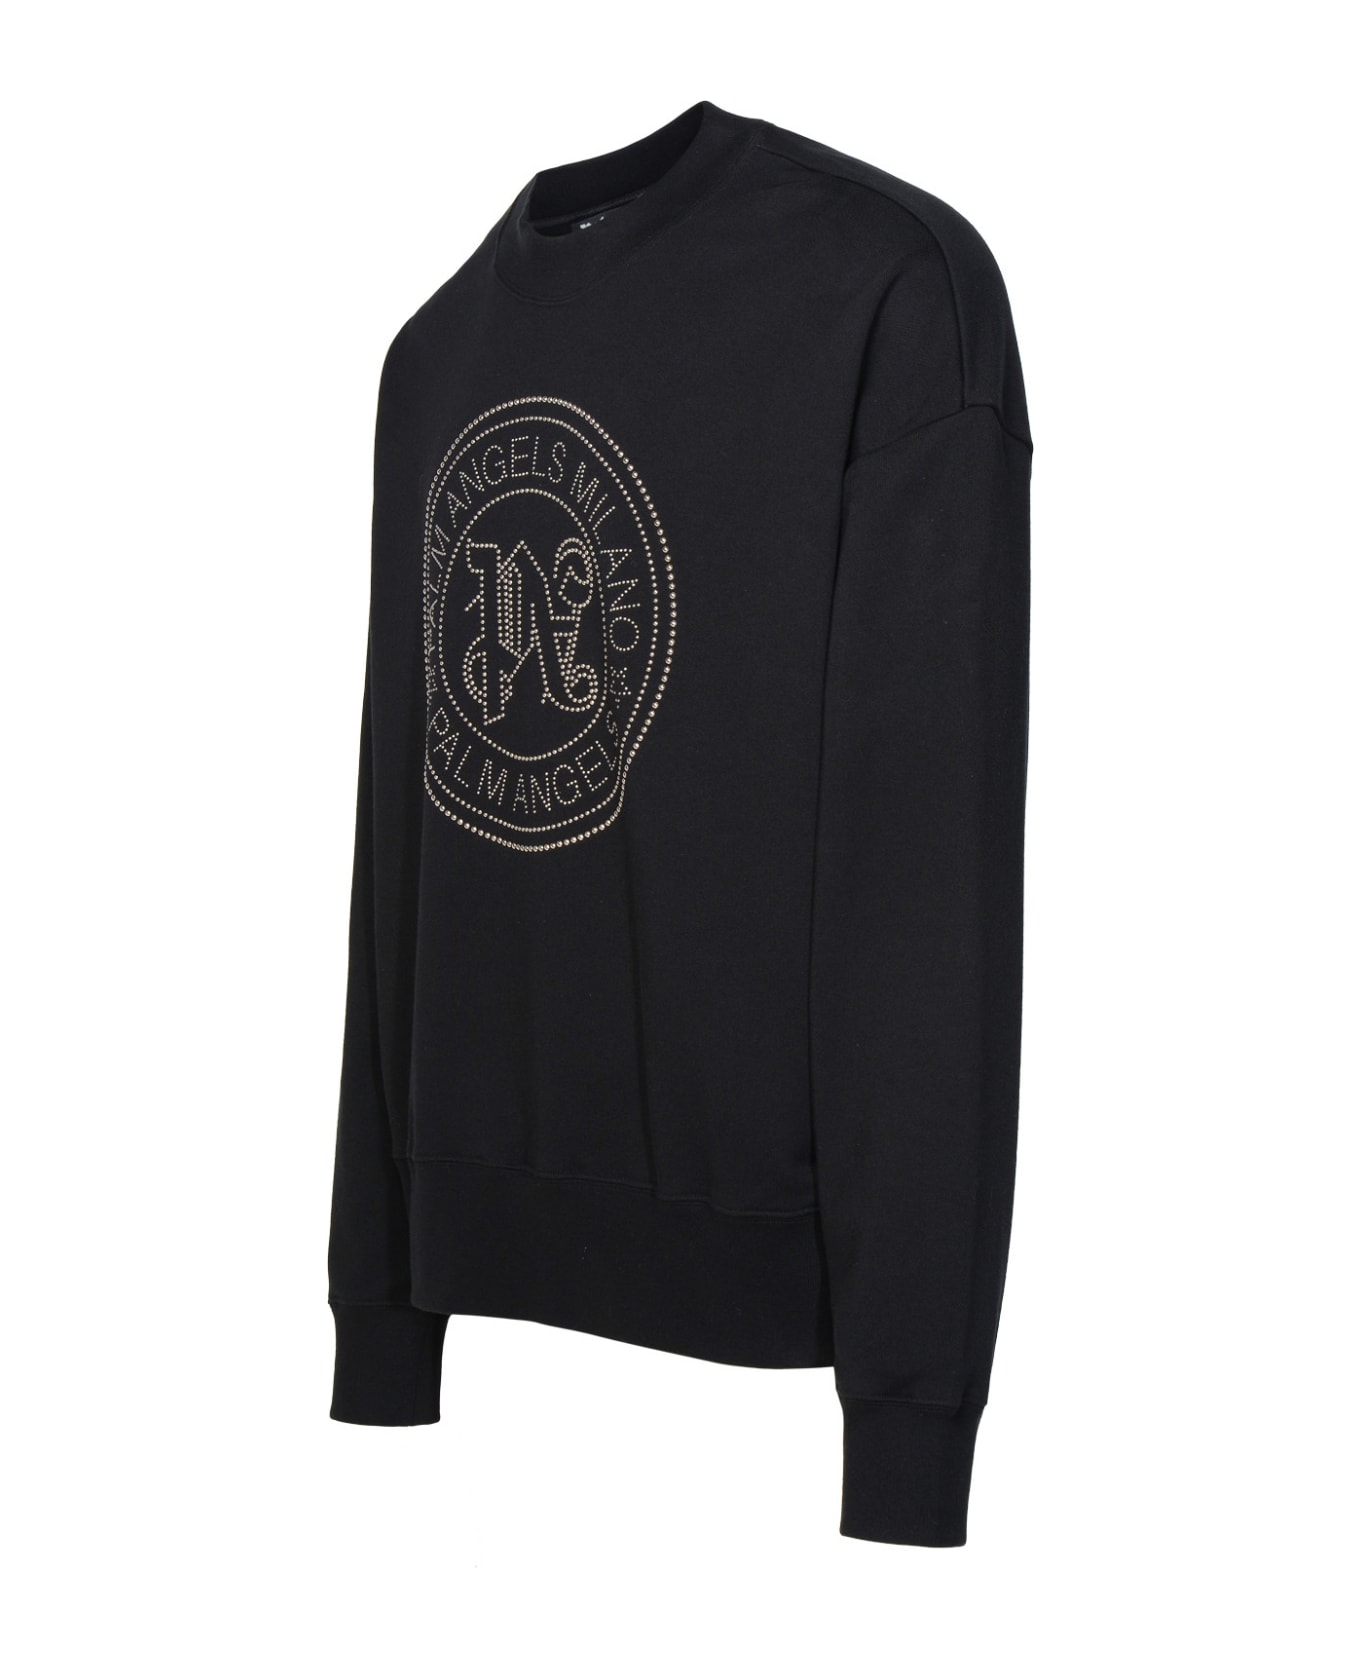 Palm Angels Milano Stud Sweatshirt - Black